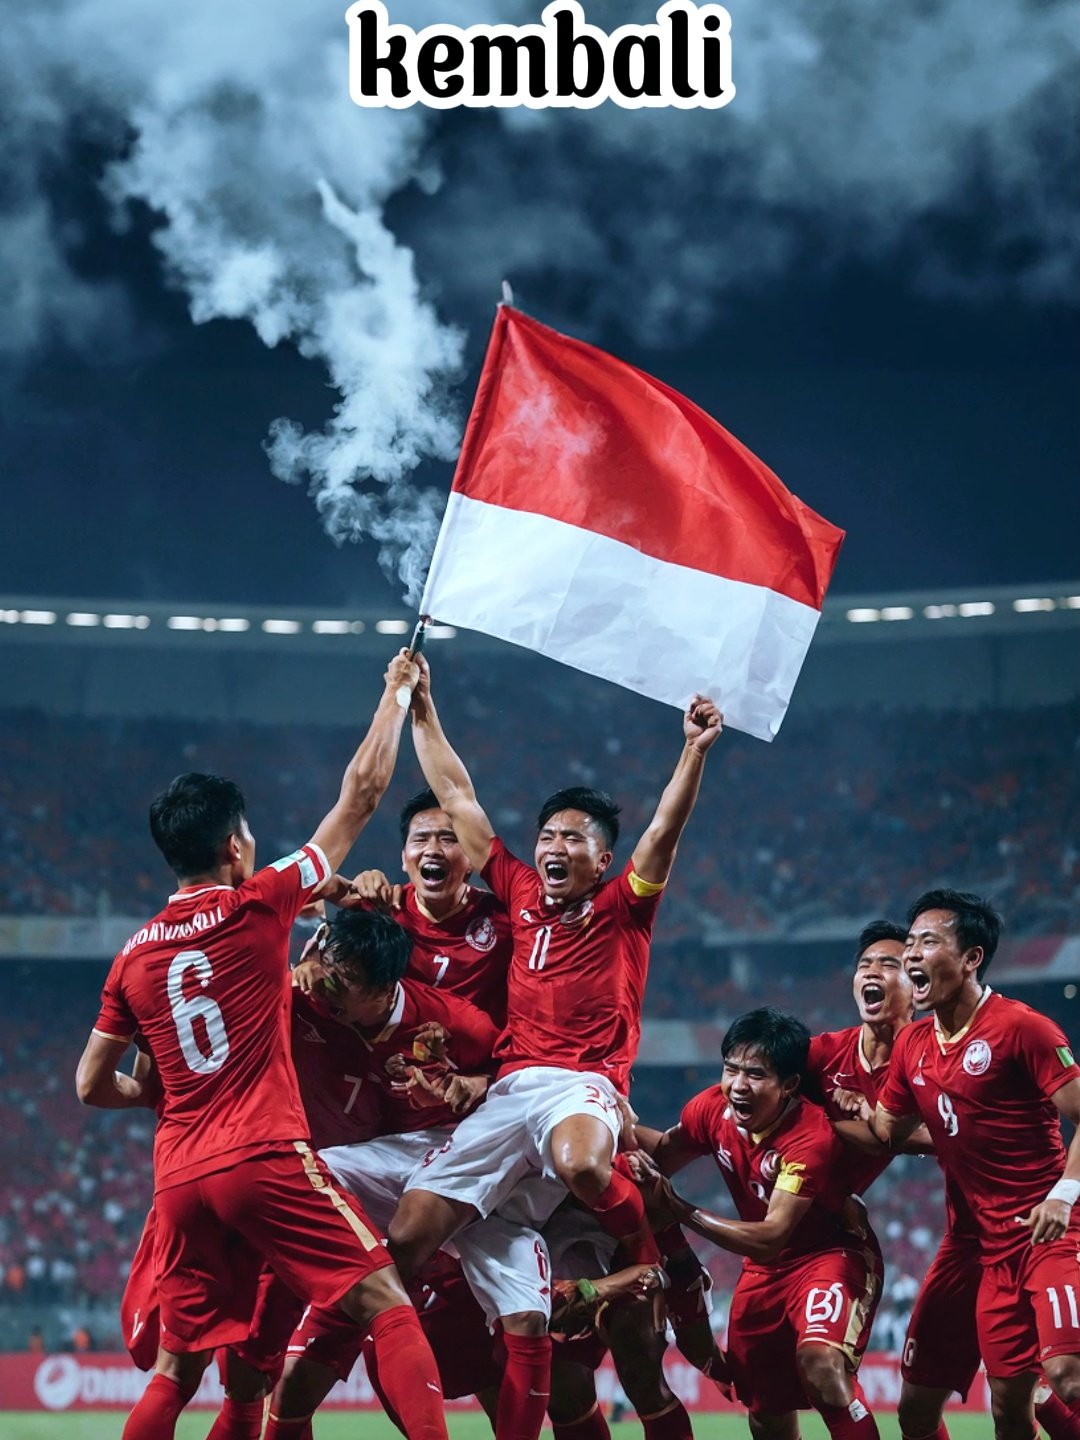 Timnas garuda  #timnas #garuda #timnasgaruda #timnasindonesia #garudamuda #garudamudaindonesia #pssi #sepakbola #sepakbolaindonesia